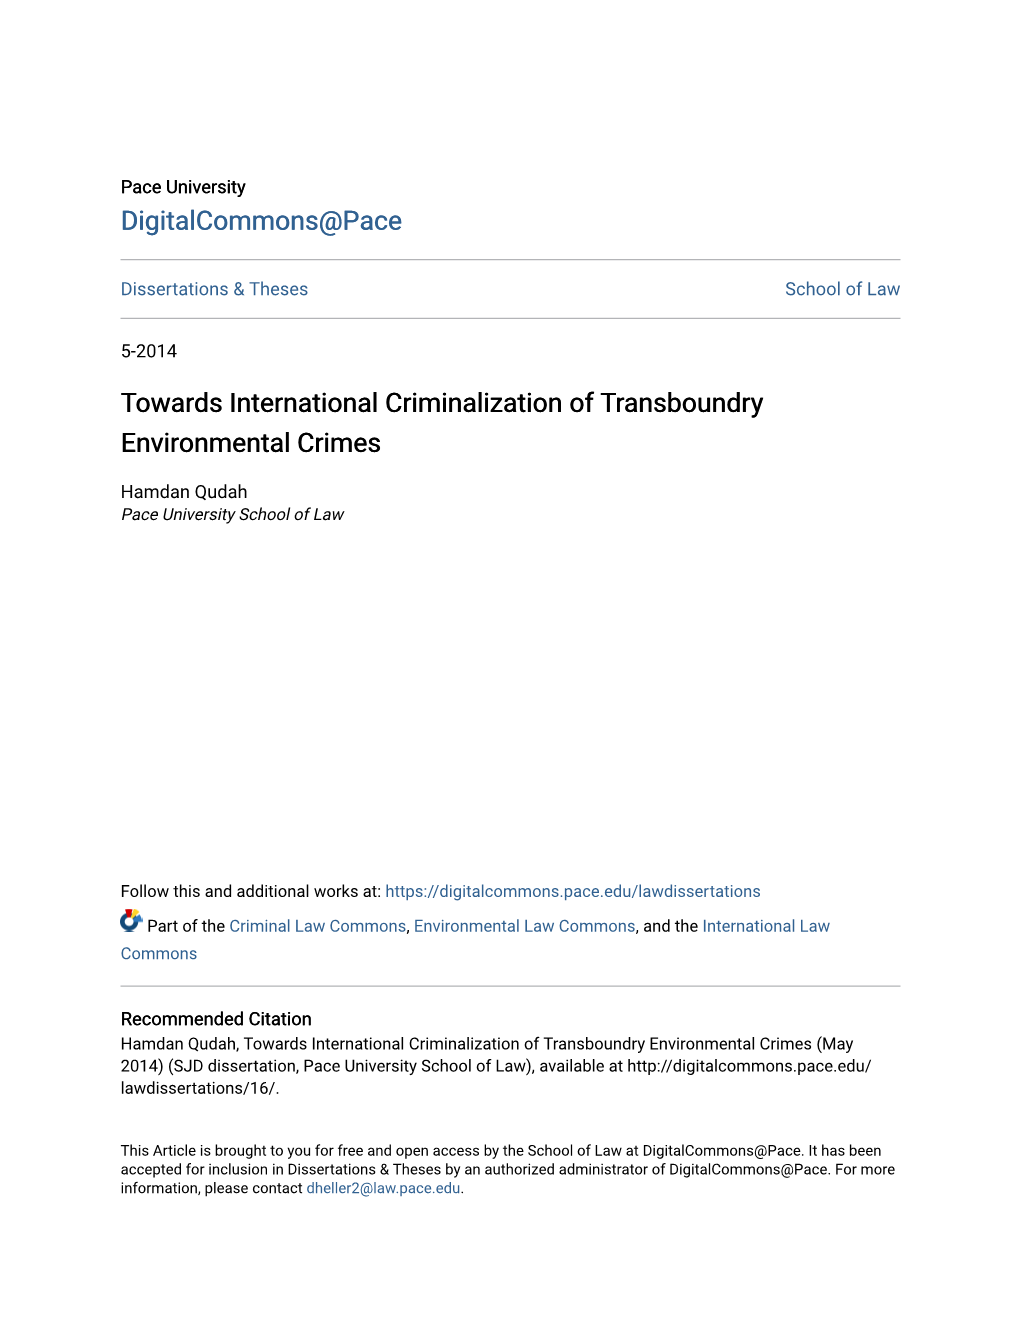 Towards International Criminalization of Transboundry Environmental Crimes